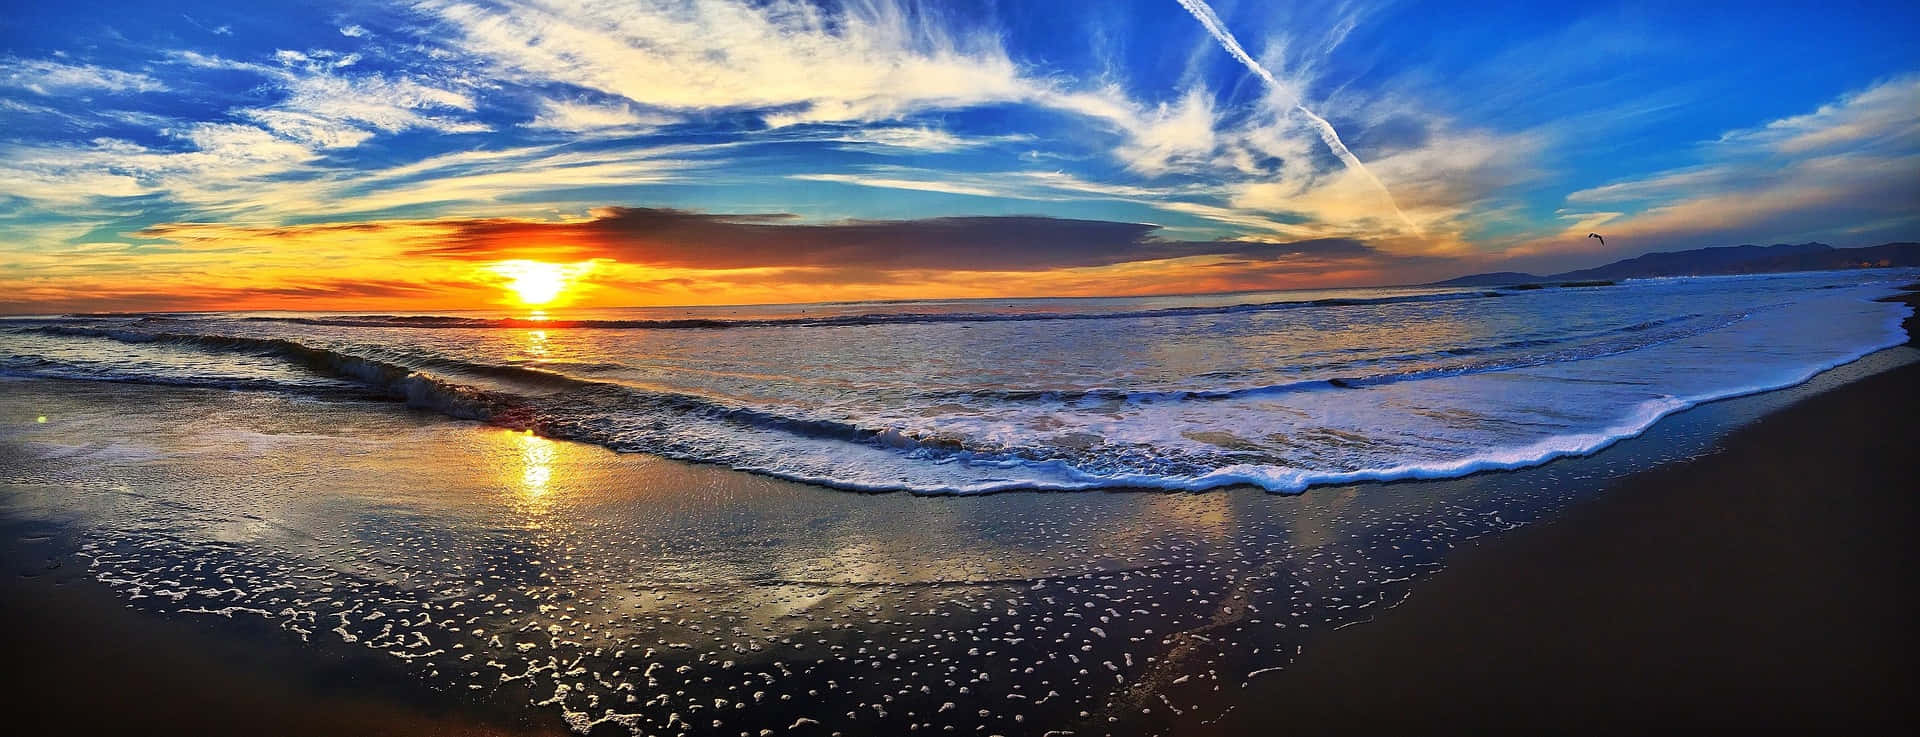 Beach Sunset View Panoramic Picture